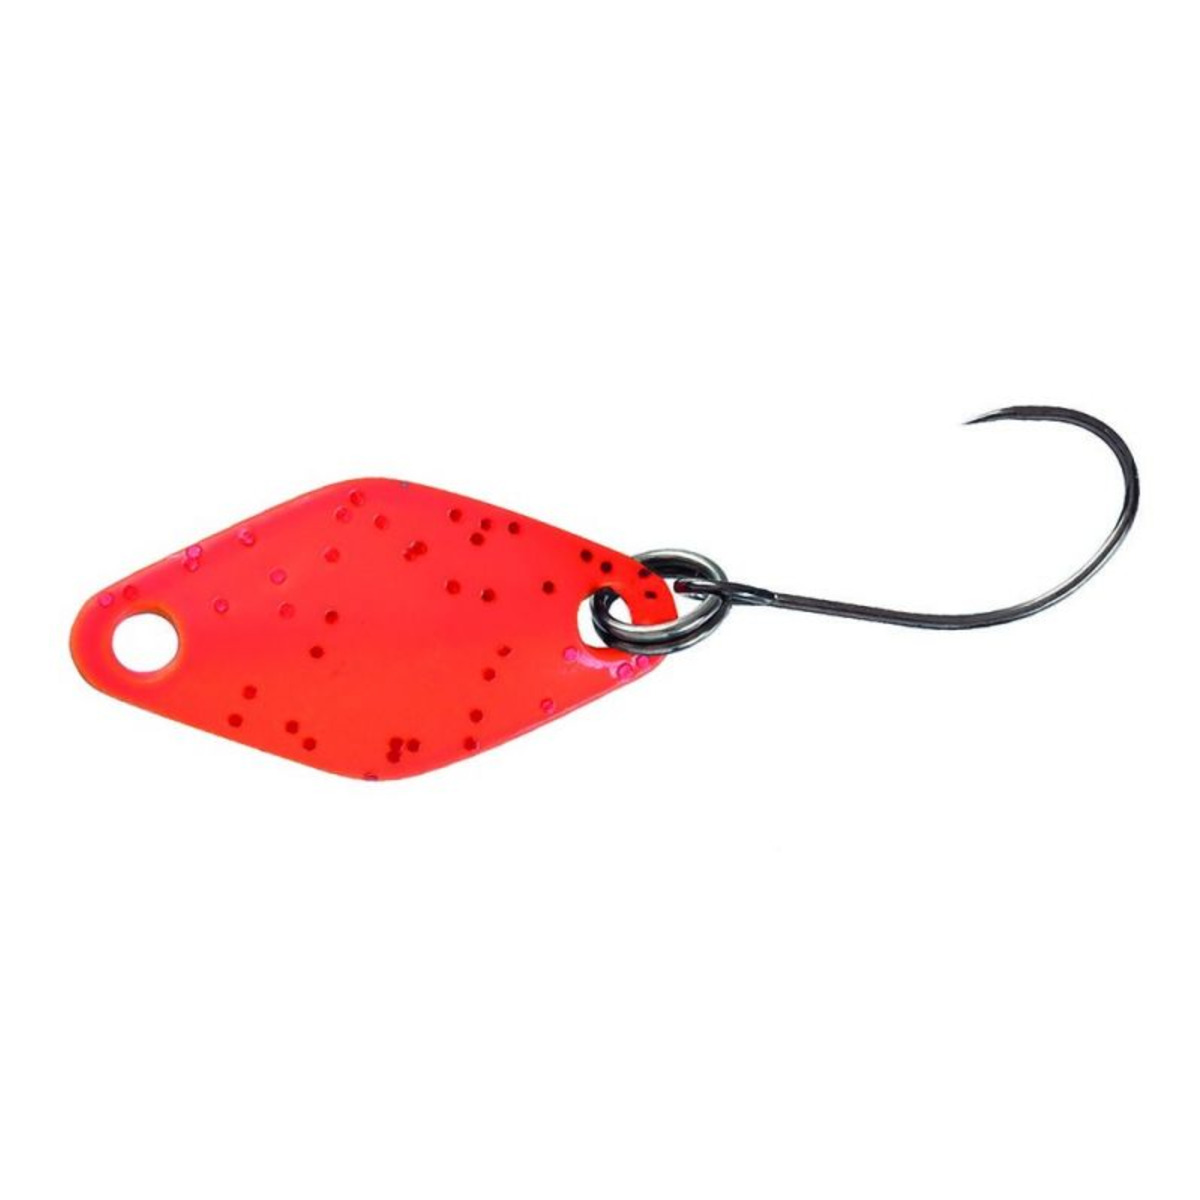 Herakles Kite Spoon - 1.2 g - Orange Red Flk